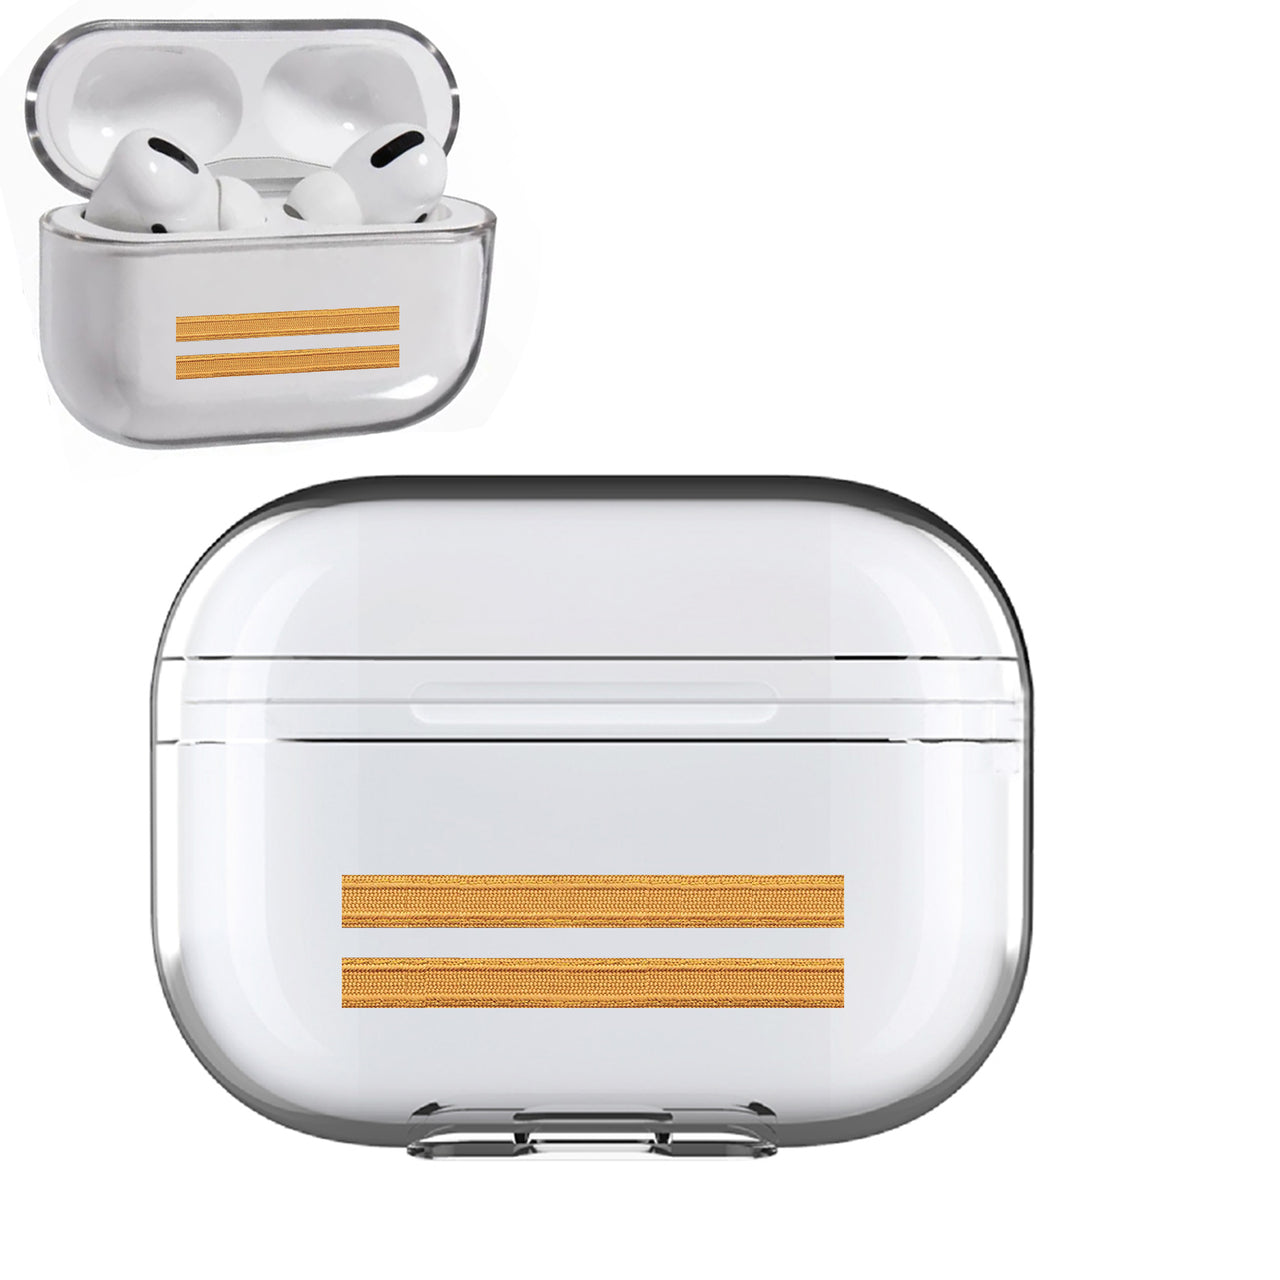 Golden Pilot Epaulettes (4,3,2 Lines) Designed Transparent Earphone AirPods "Pro" Cases